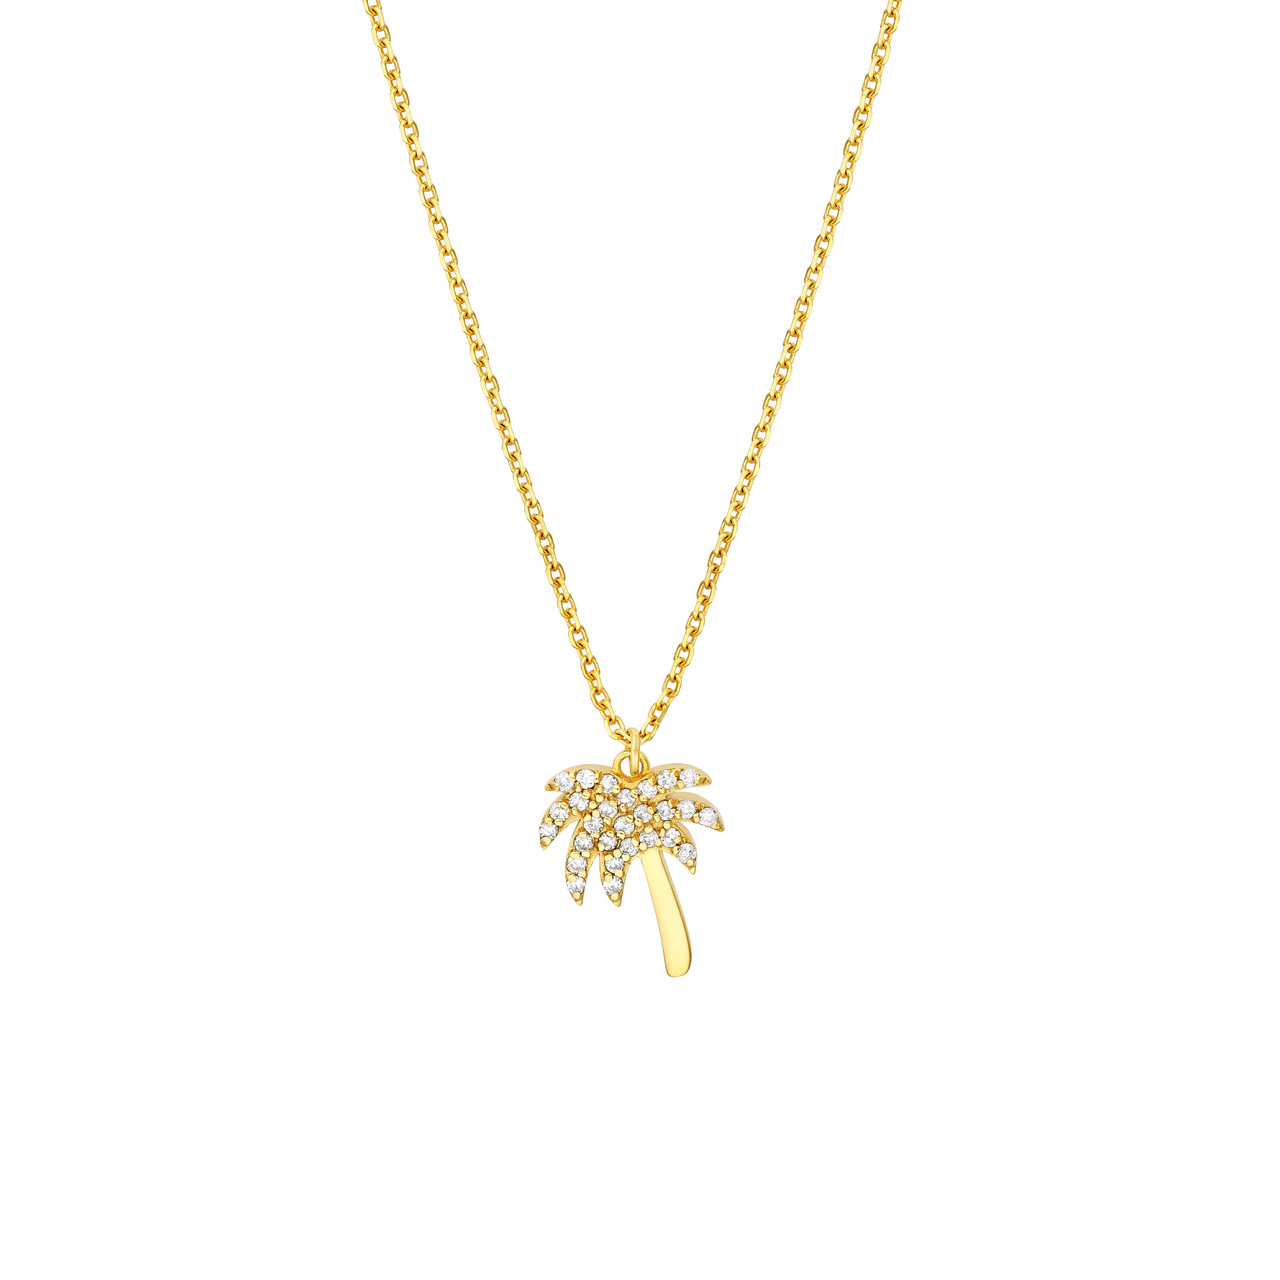 Yello Gold 1/8ctw Diamond Palm Tree Necklace l 18 inches